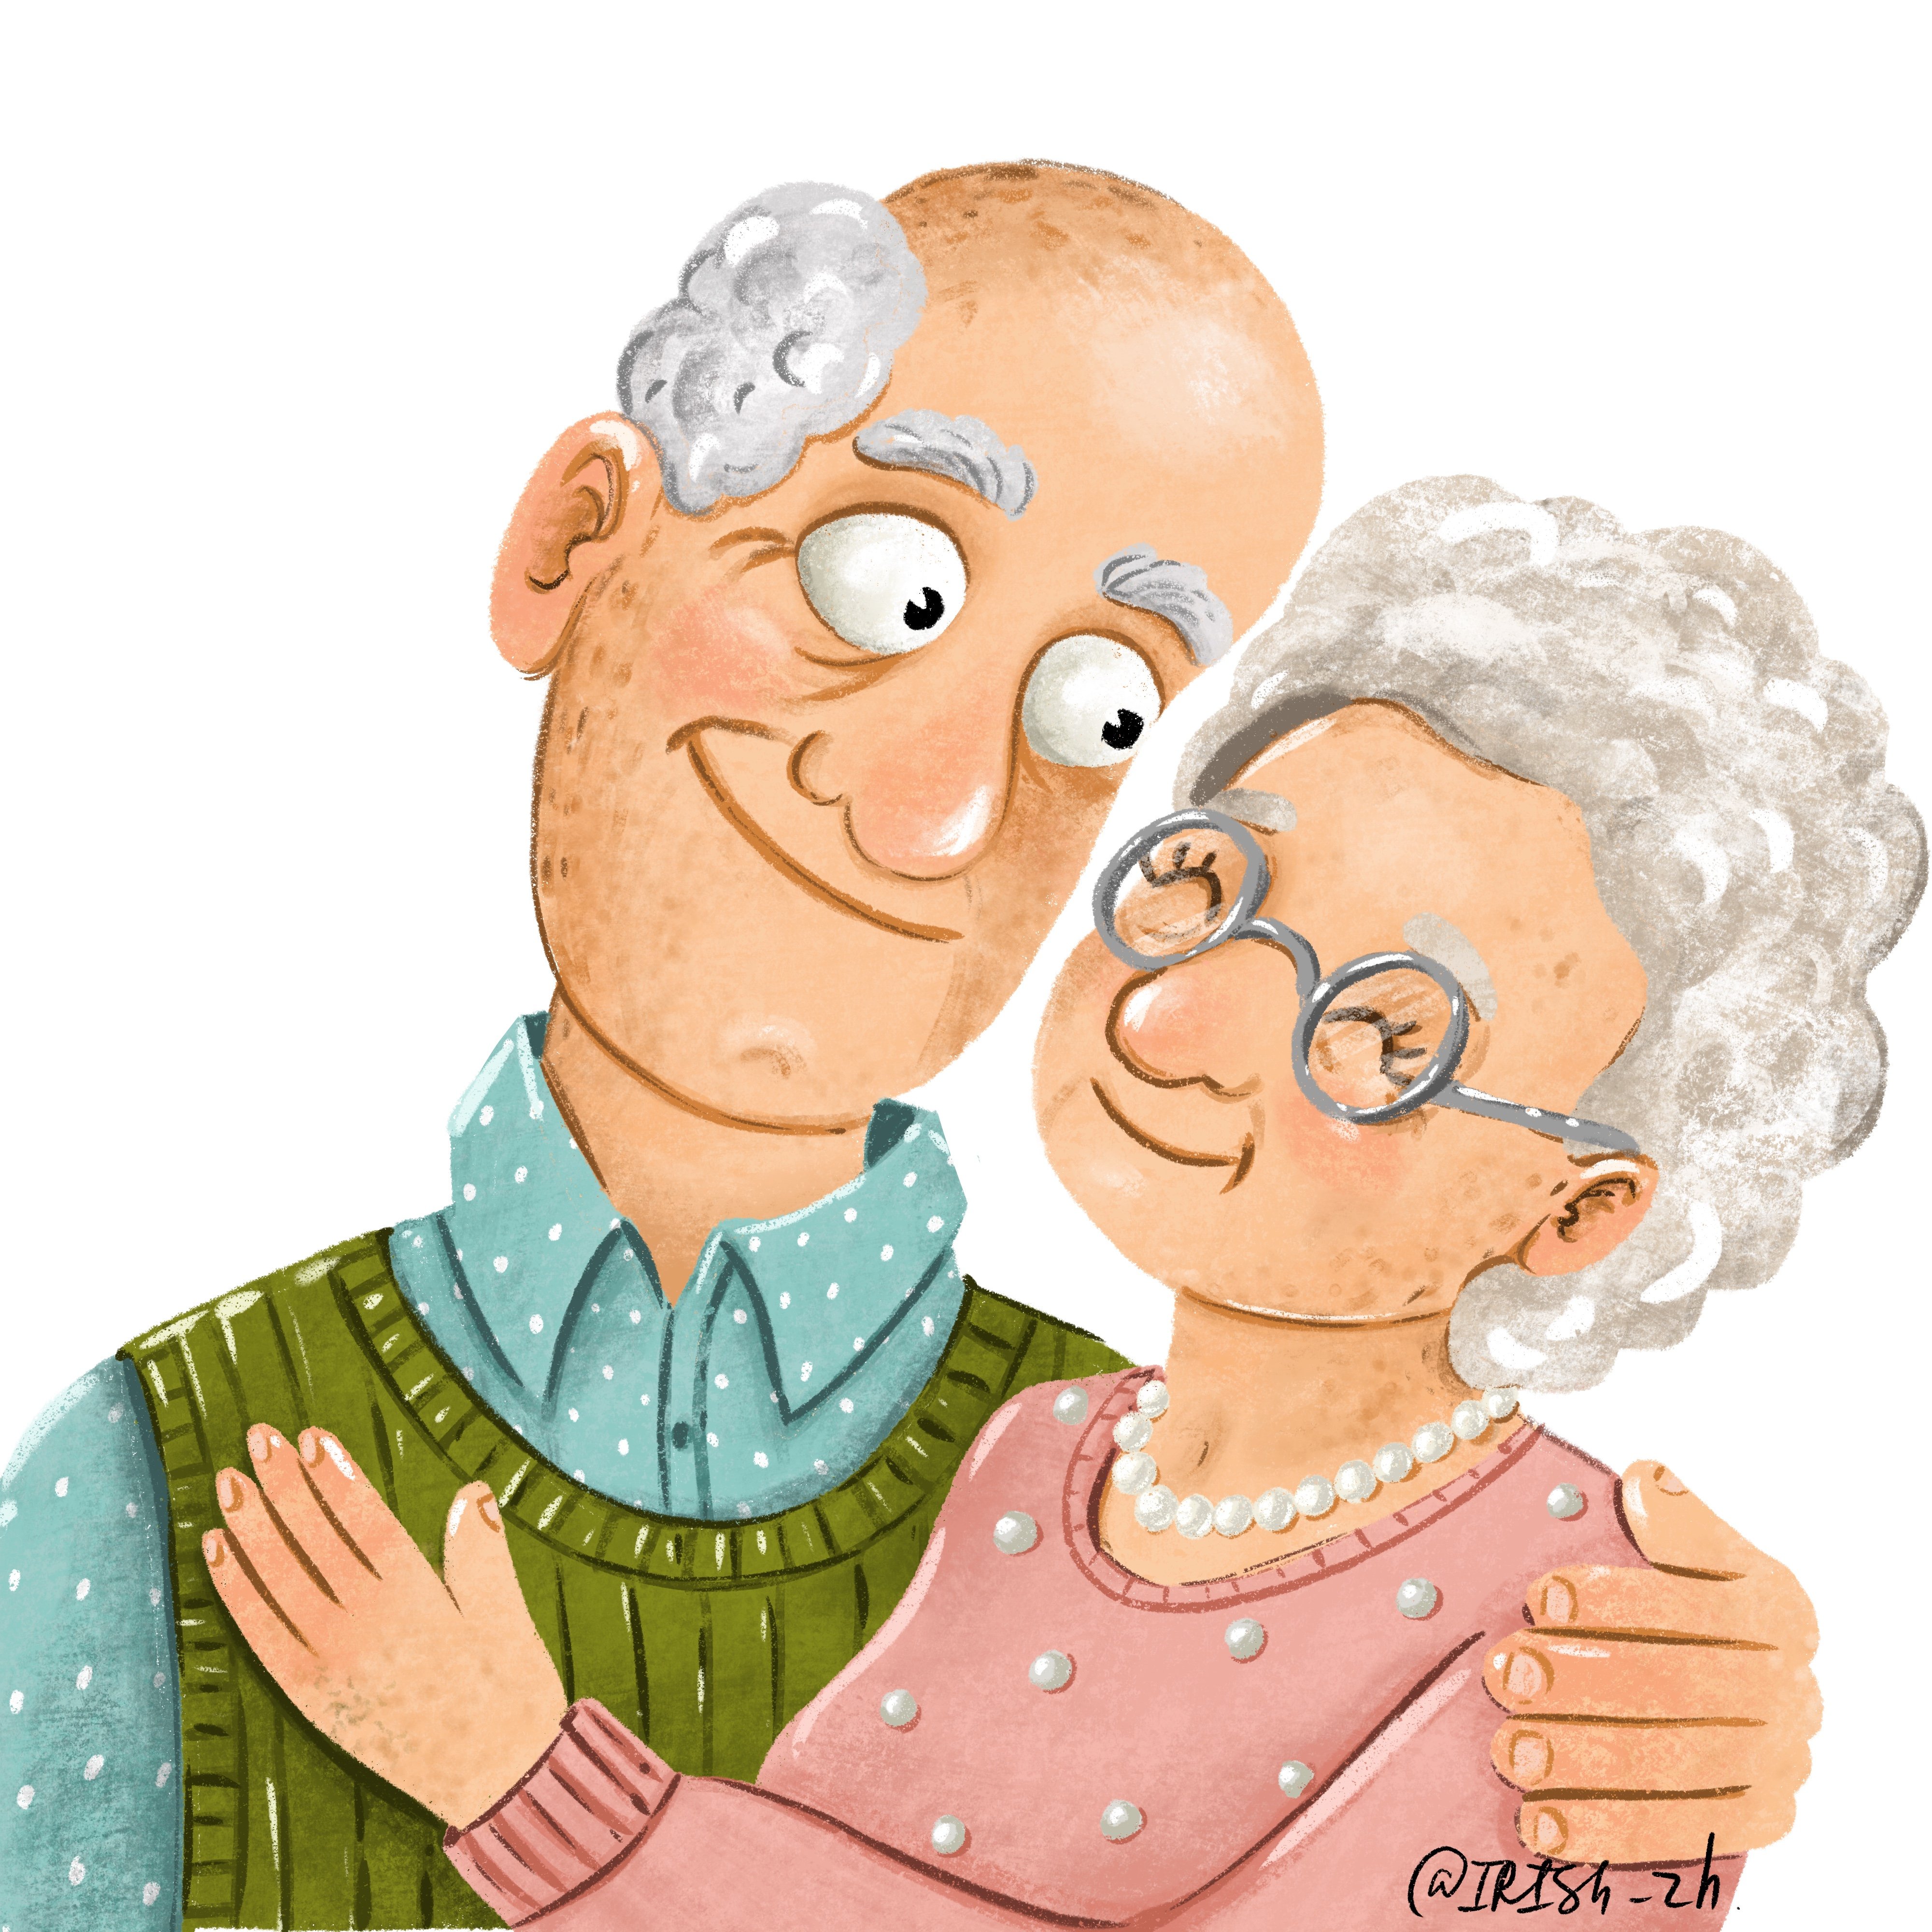 Включи про дедушку. Бабушка и дедушка. Бабушка рядышком с дедушкой. Изображение бабушки и дедушки. Бабуля и дедуля.